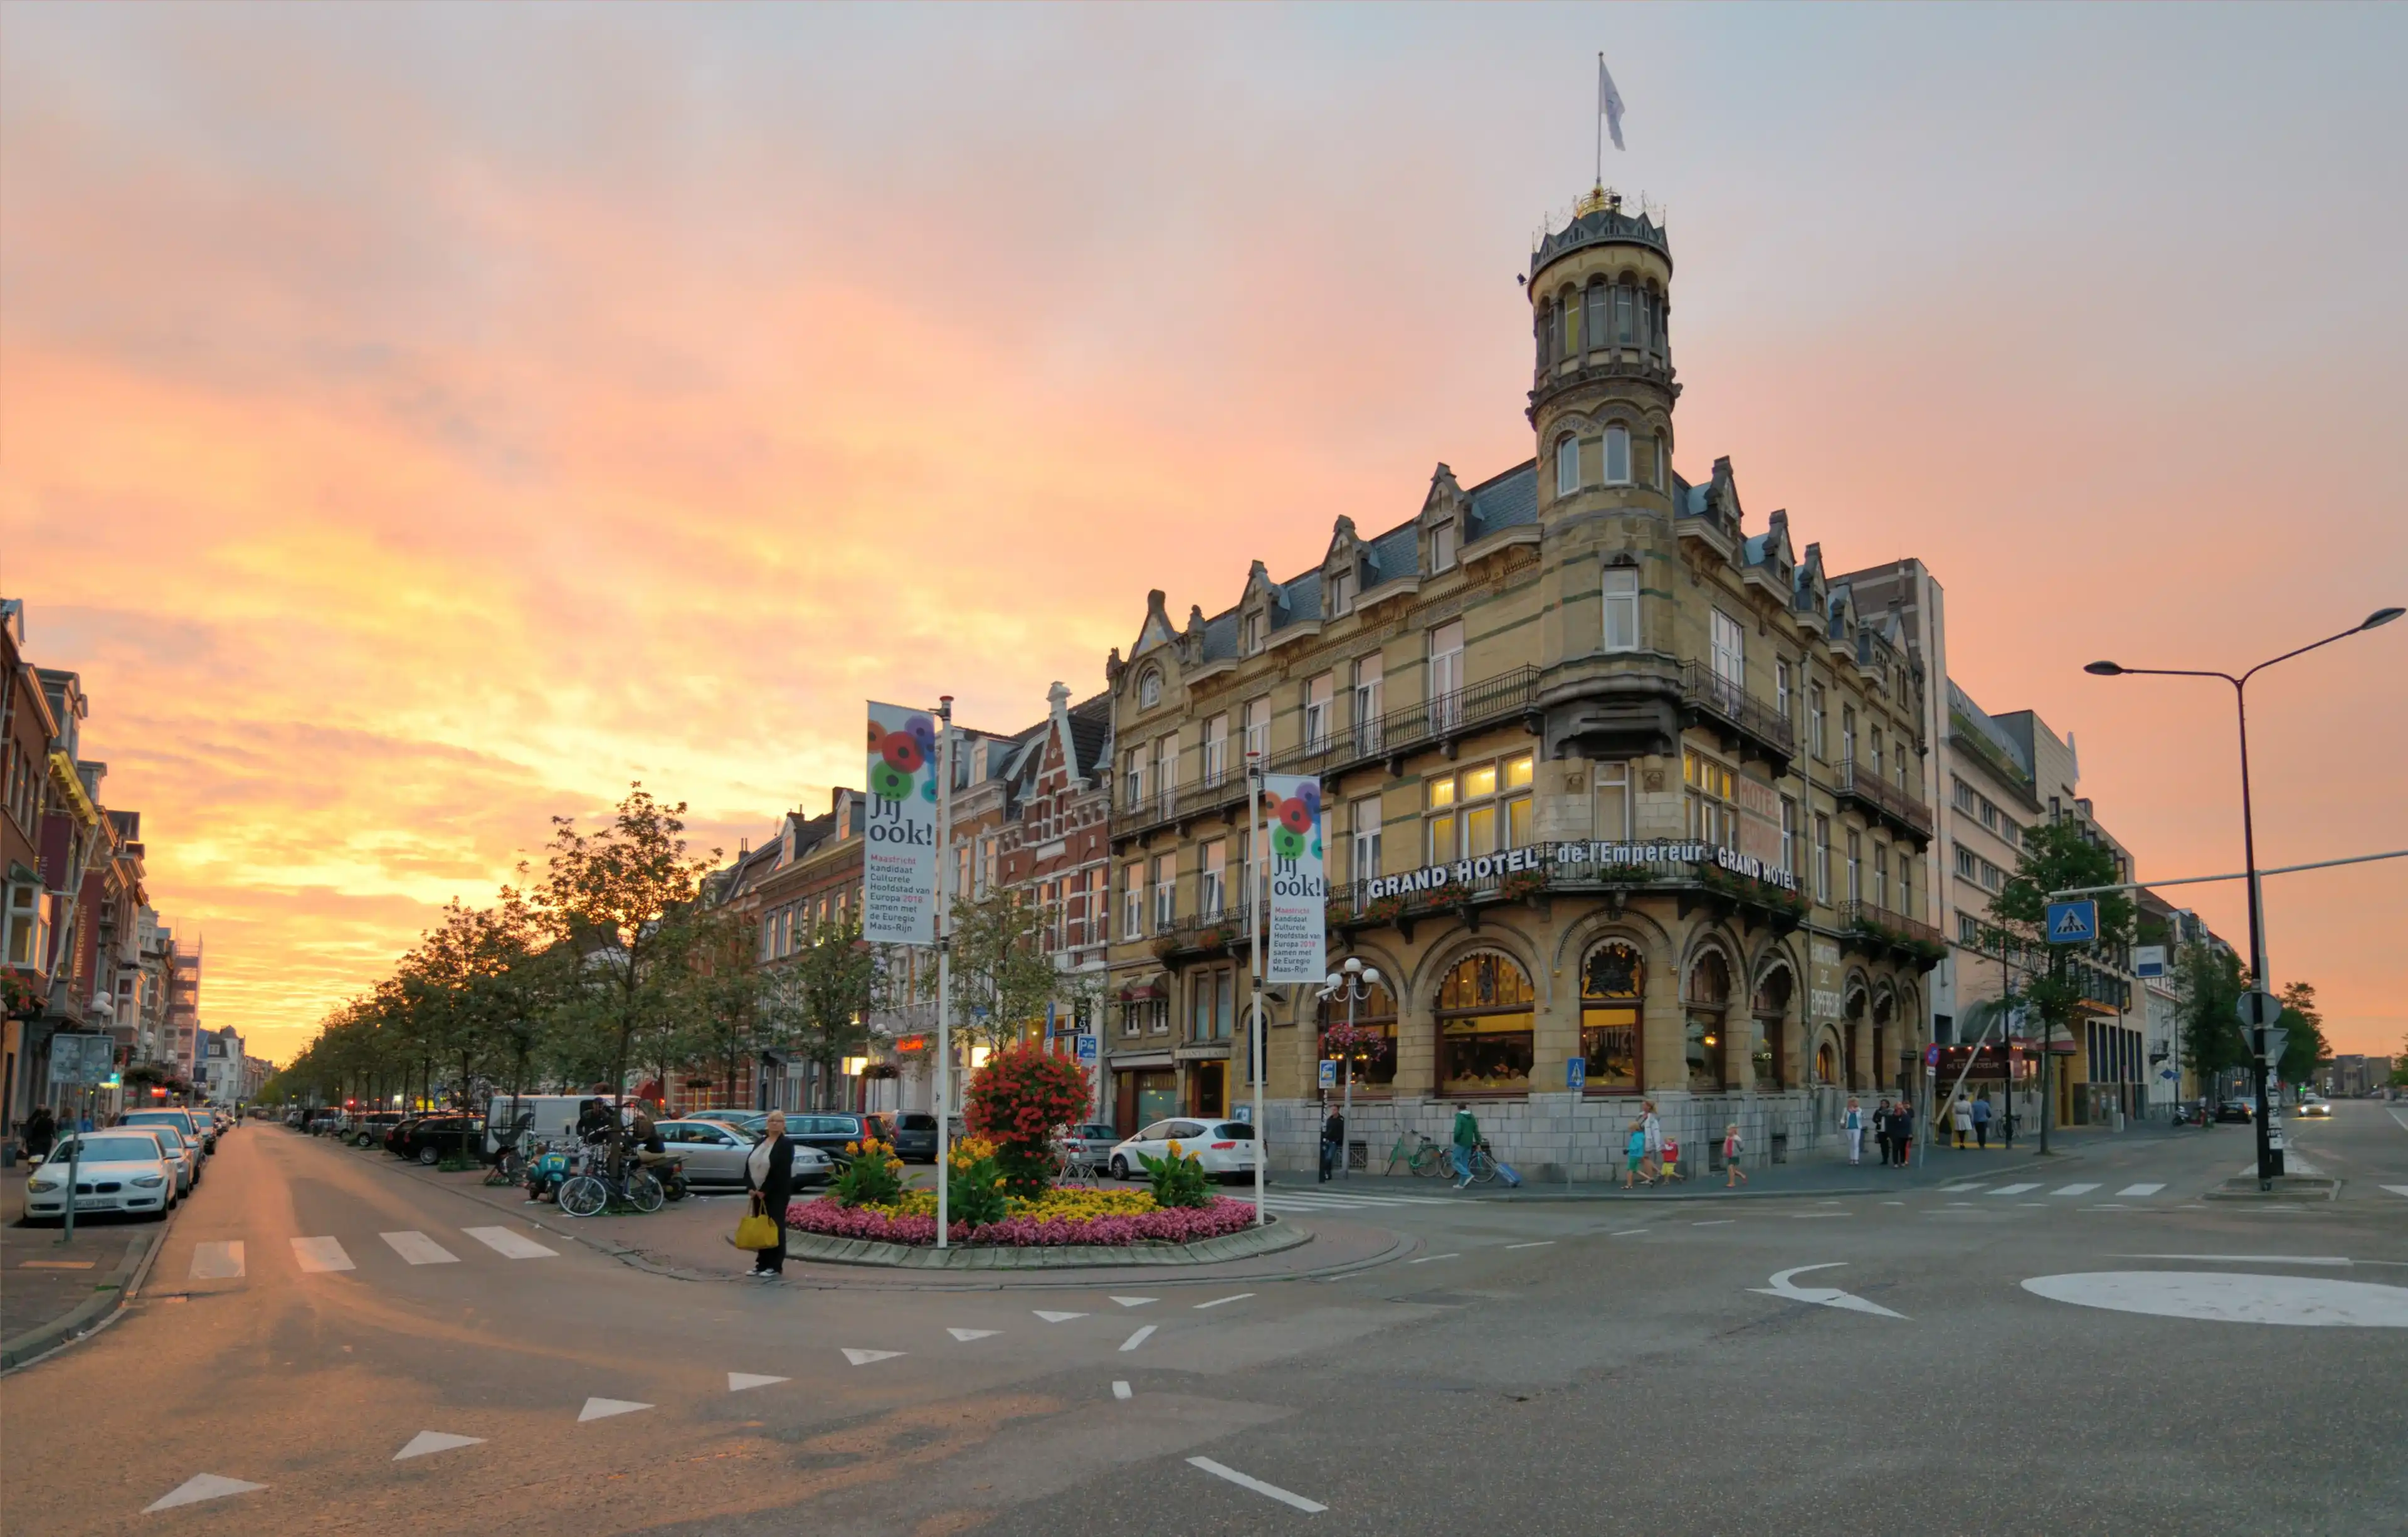 Best Maastricht hotels. Cheap hotels in Maastricht, Netherlands